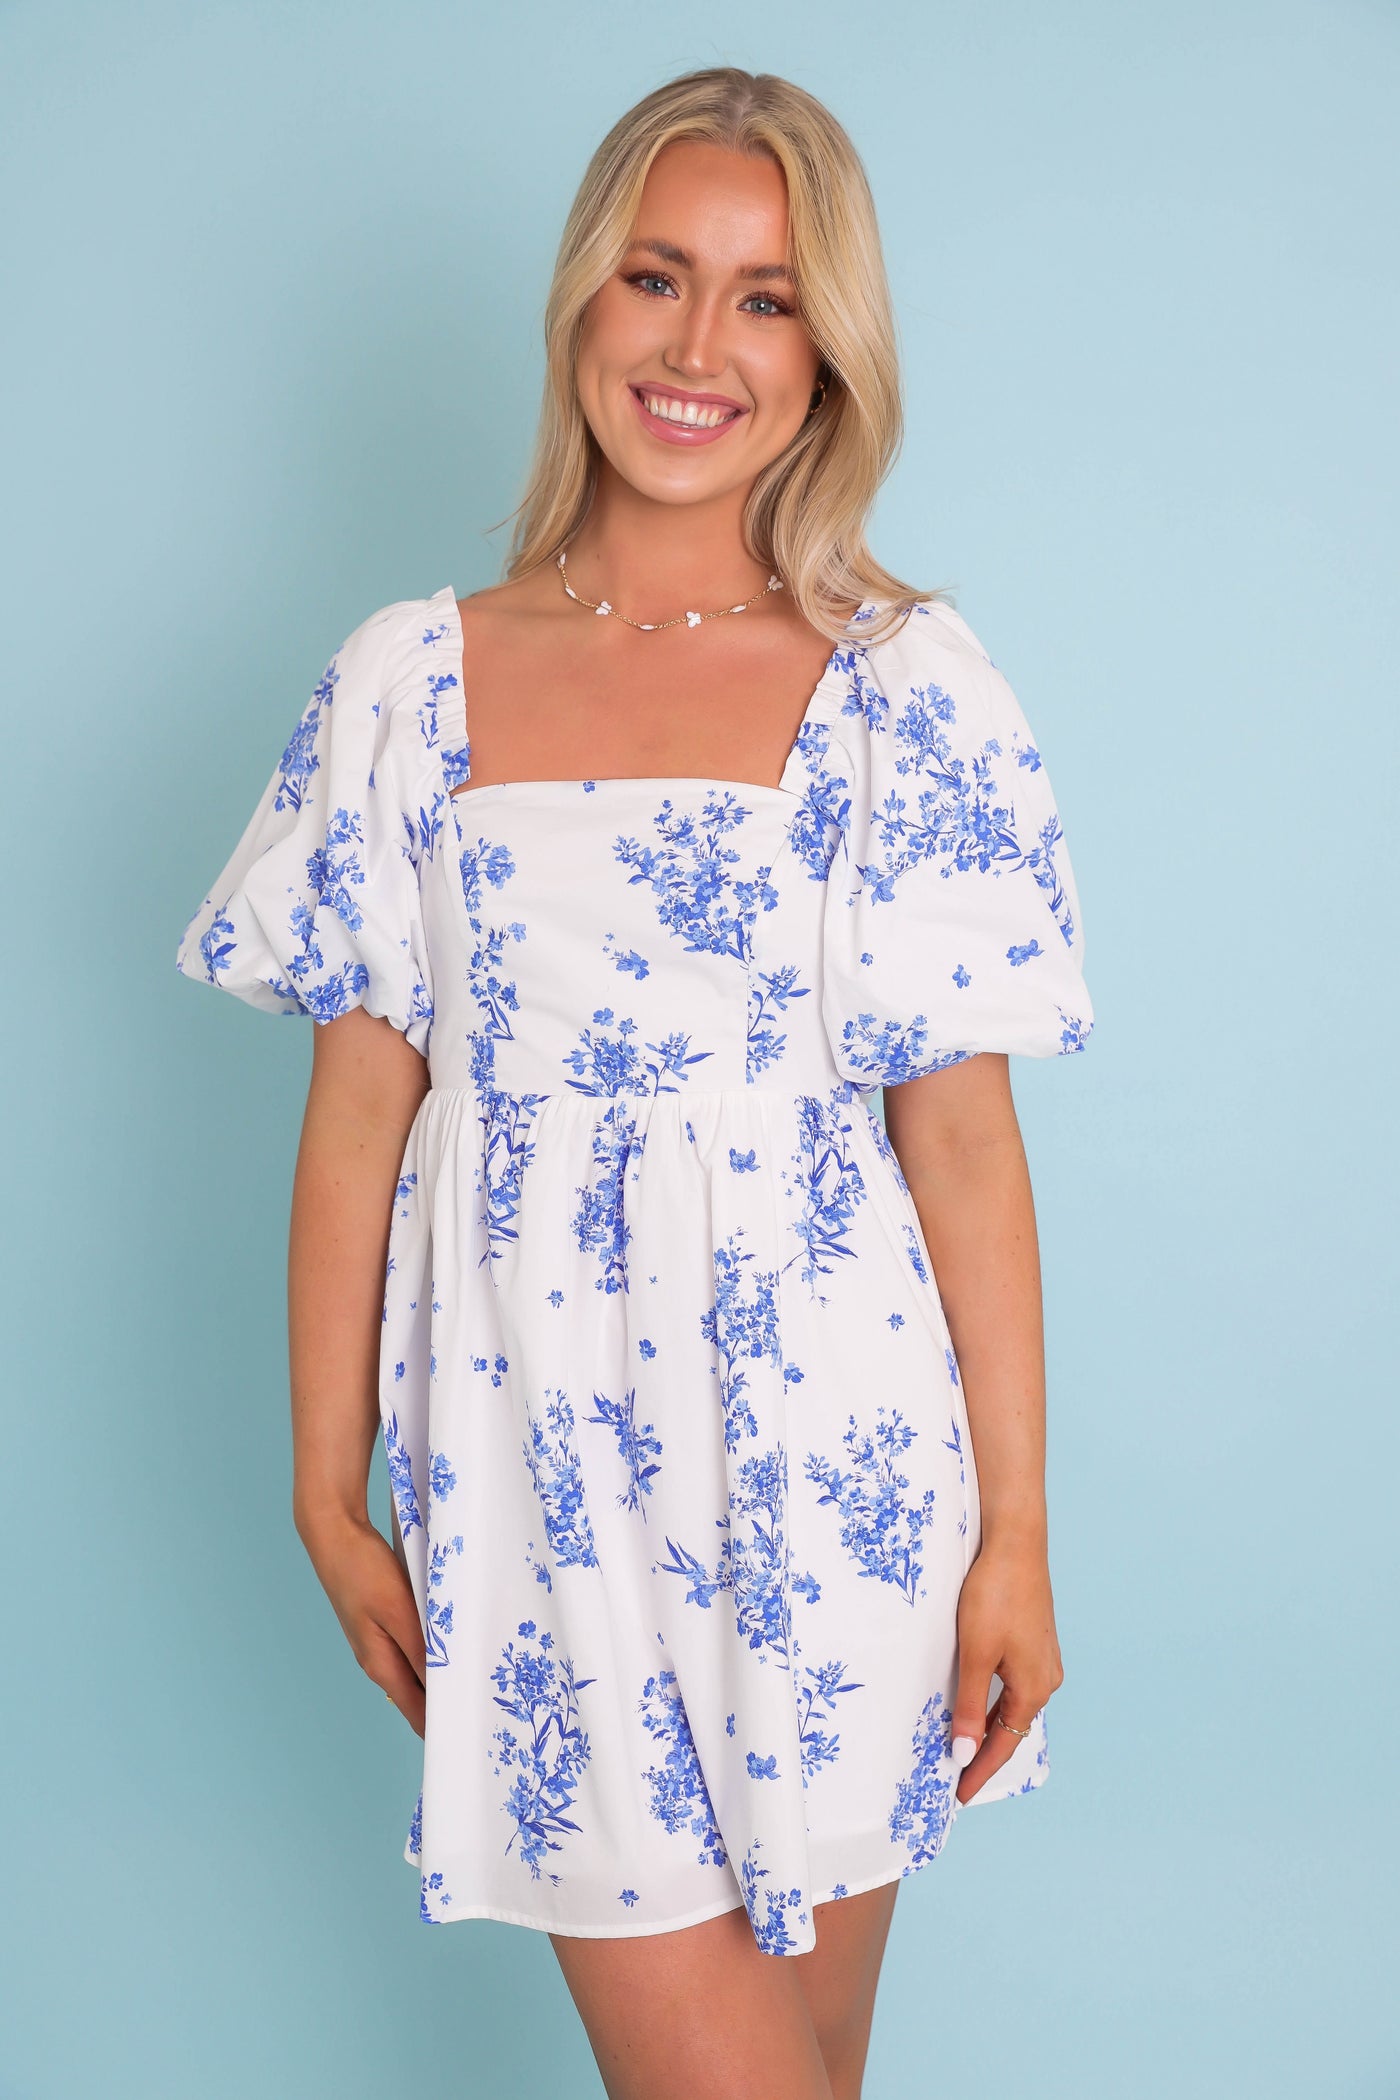 Puff Sleeve Babydoll Mini Dress- Women's Blue and White Floral Dress- SugarLips Mini Dress